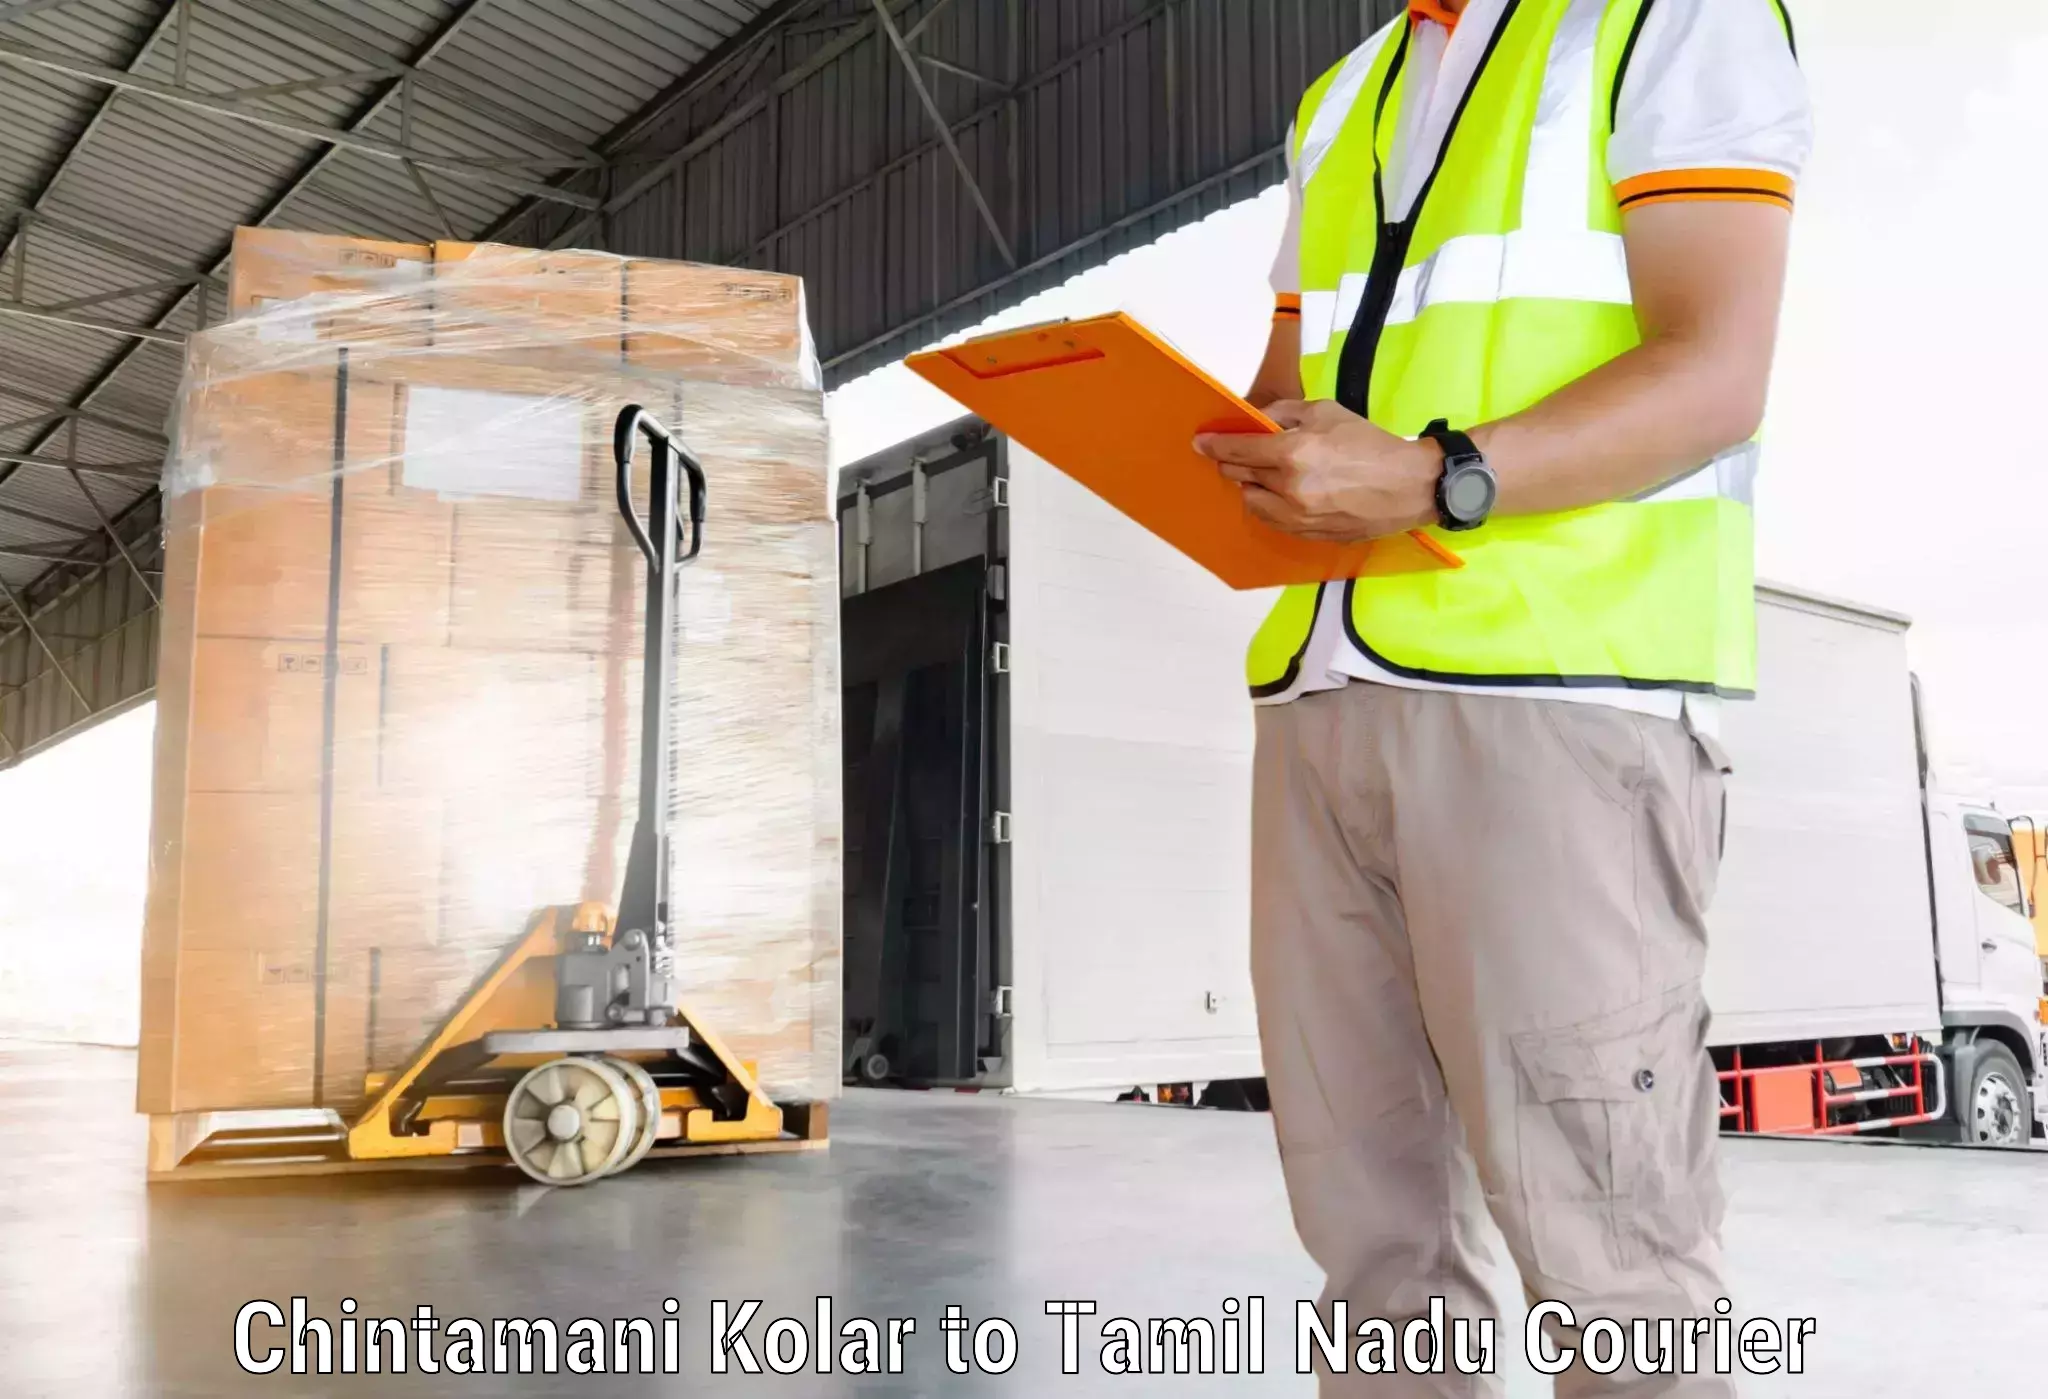 Professional courier services Chintamani Kolar to Pennagaram